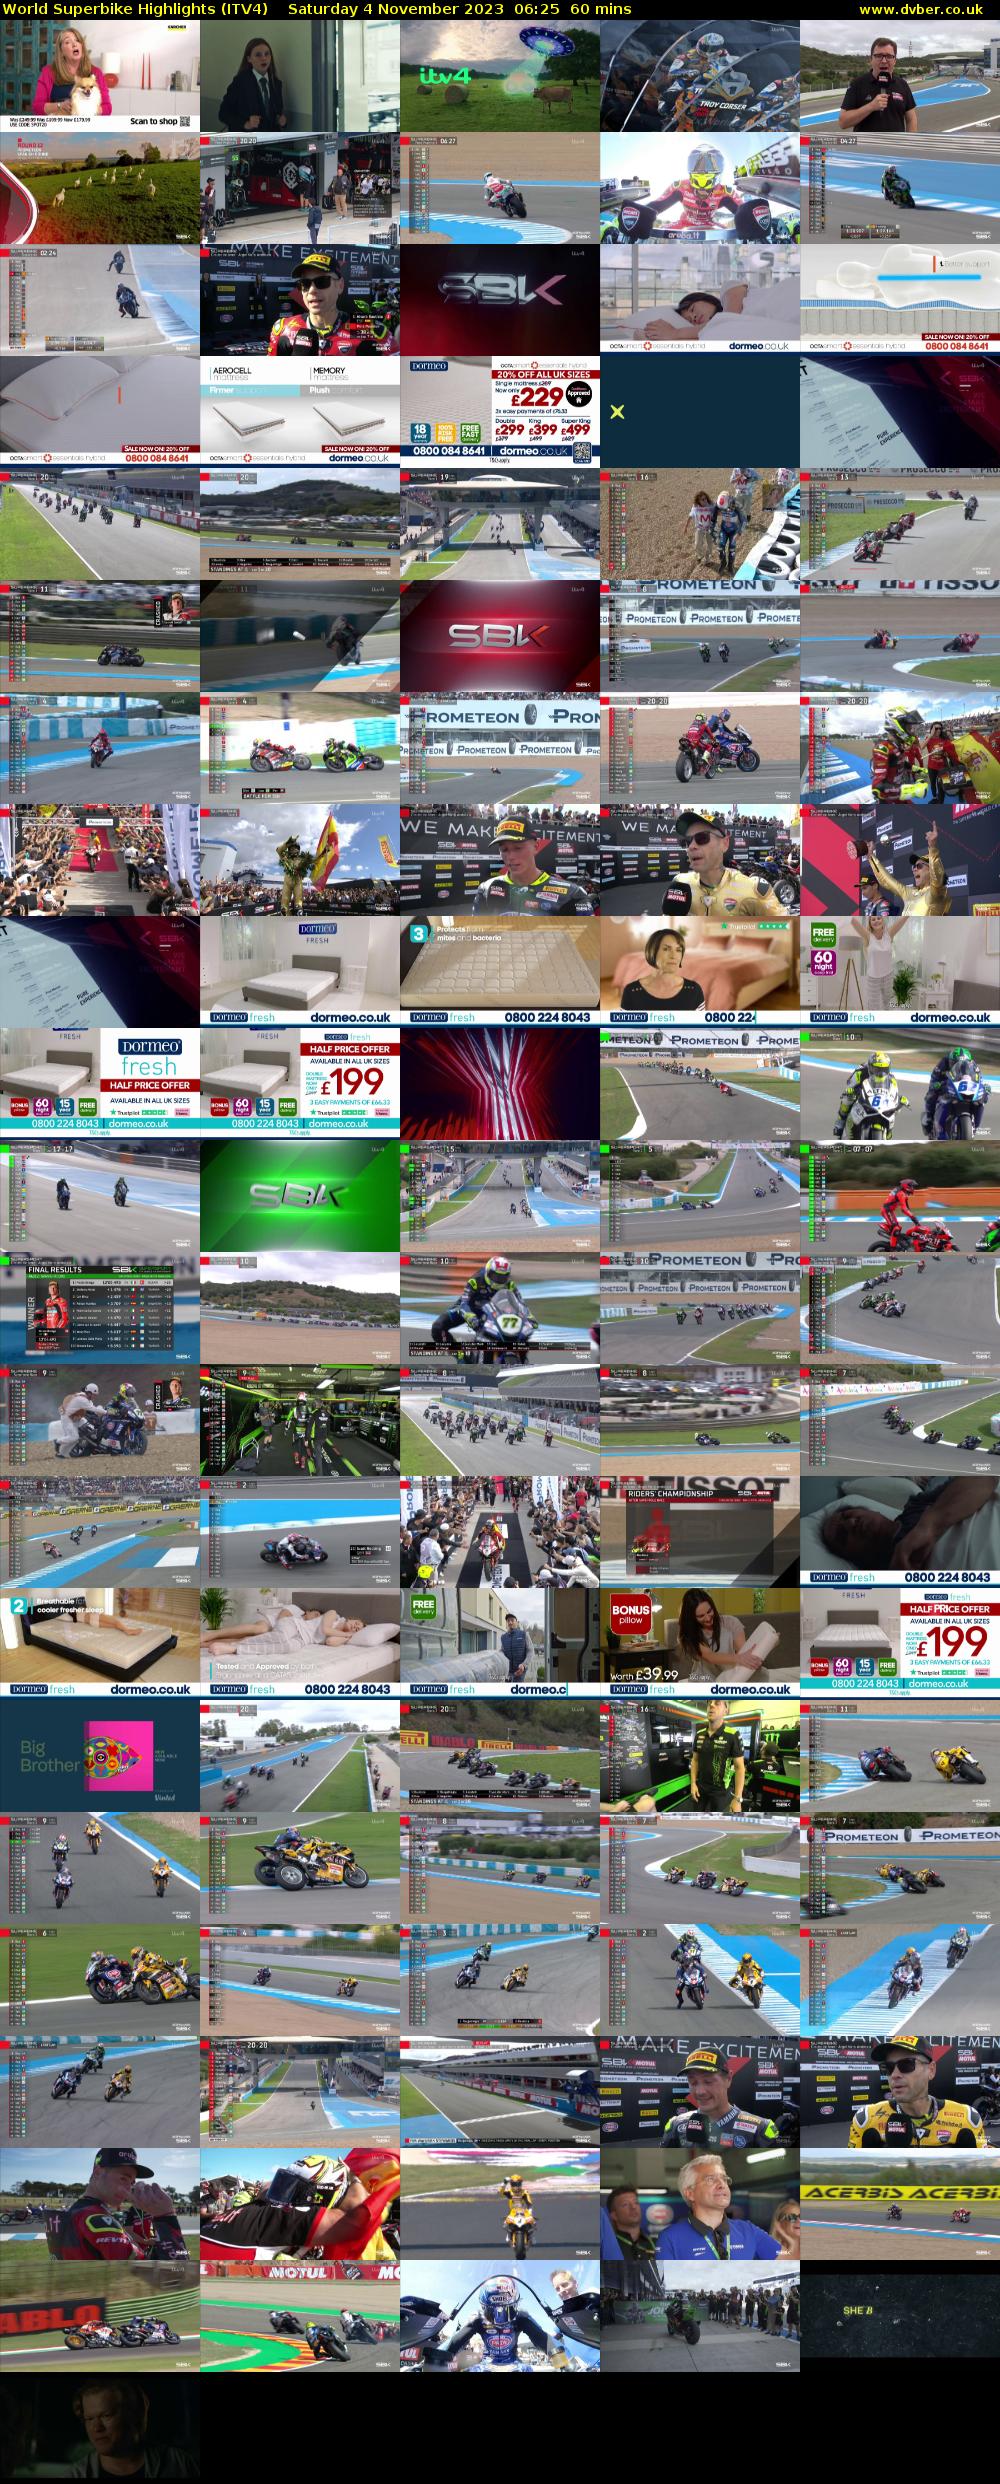 World Superbike Highlights (ITV4) Saturday 4 November 2023 06:25 - 07:25